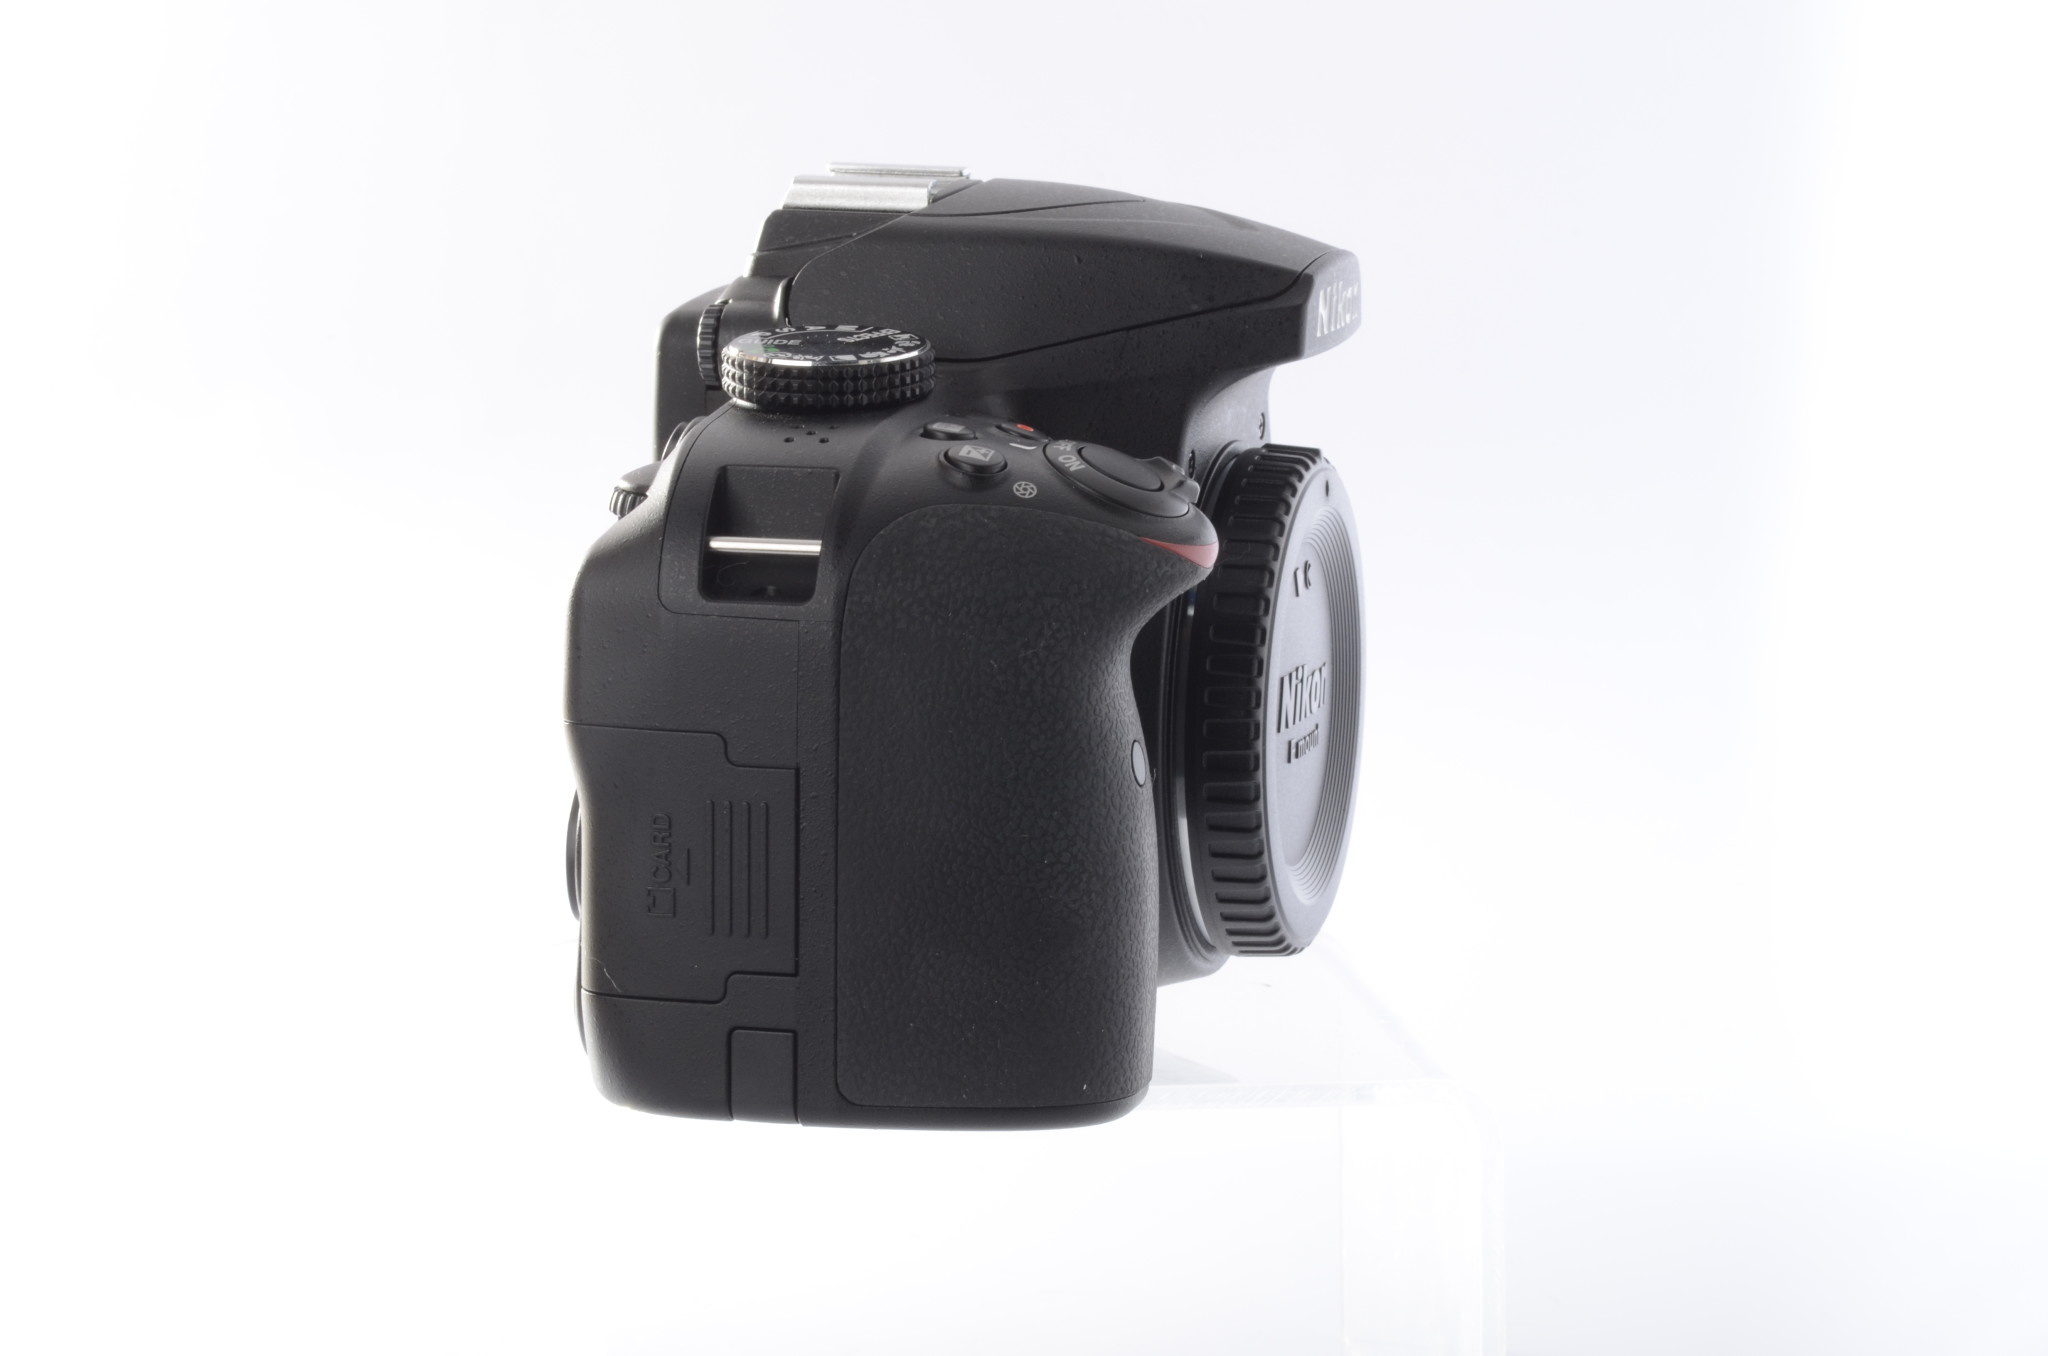 Nikon D3400 DSLR Camera Body - LeZot Camera, Sales and Camera Repair, Camera Buyers